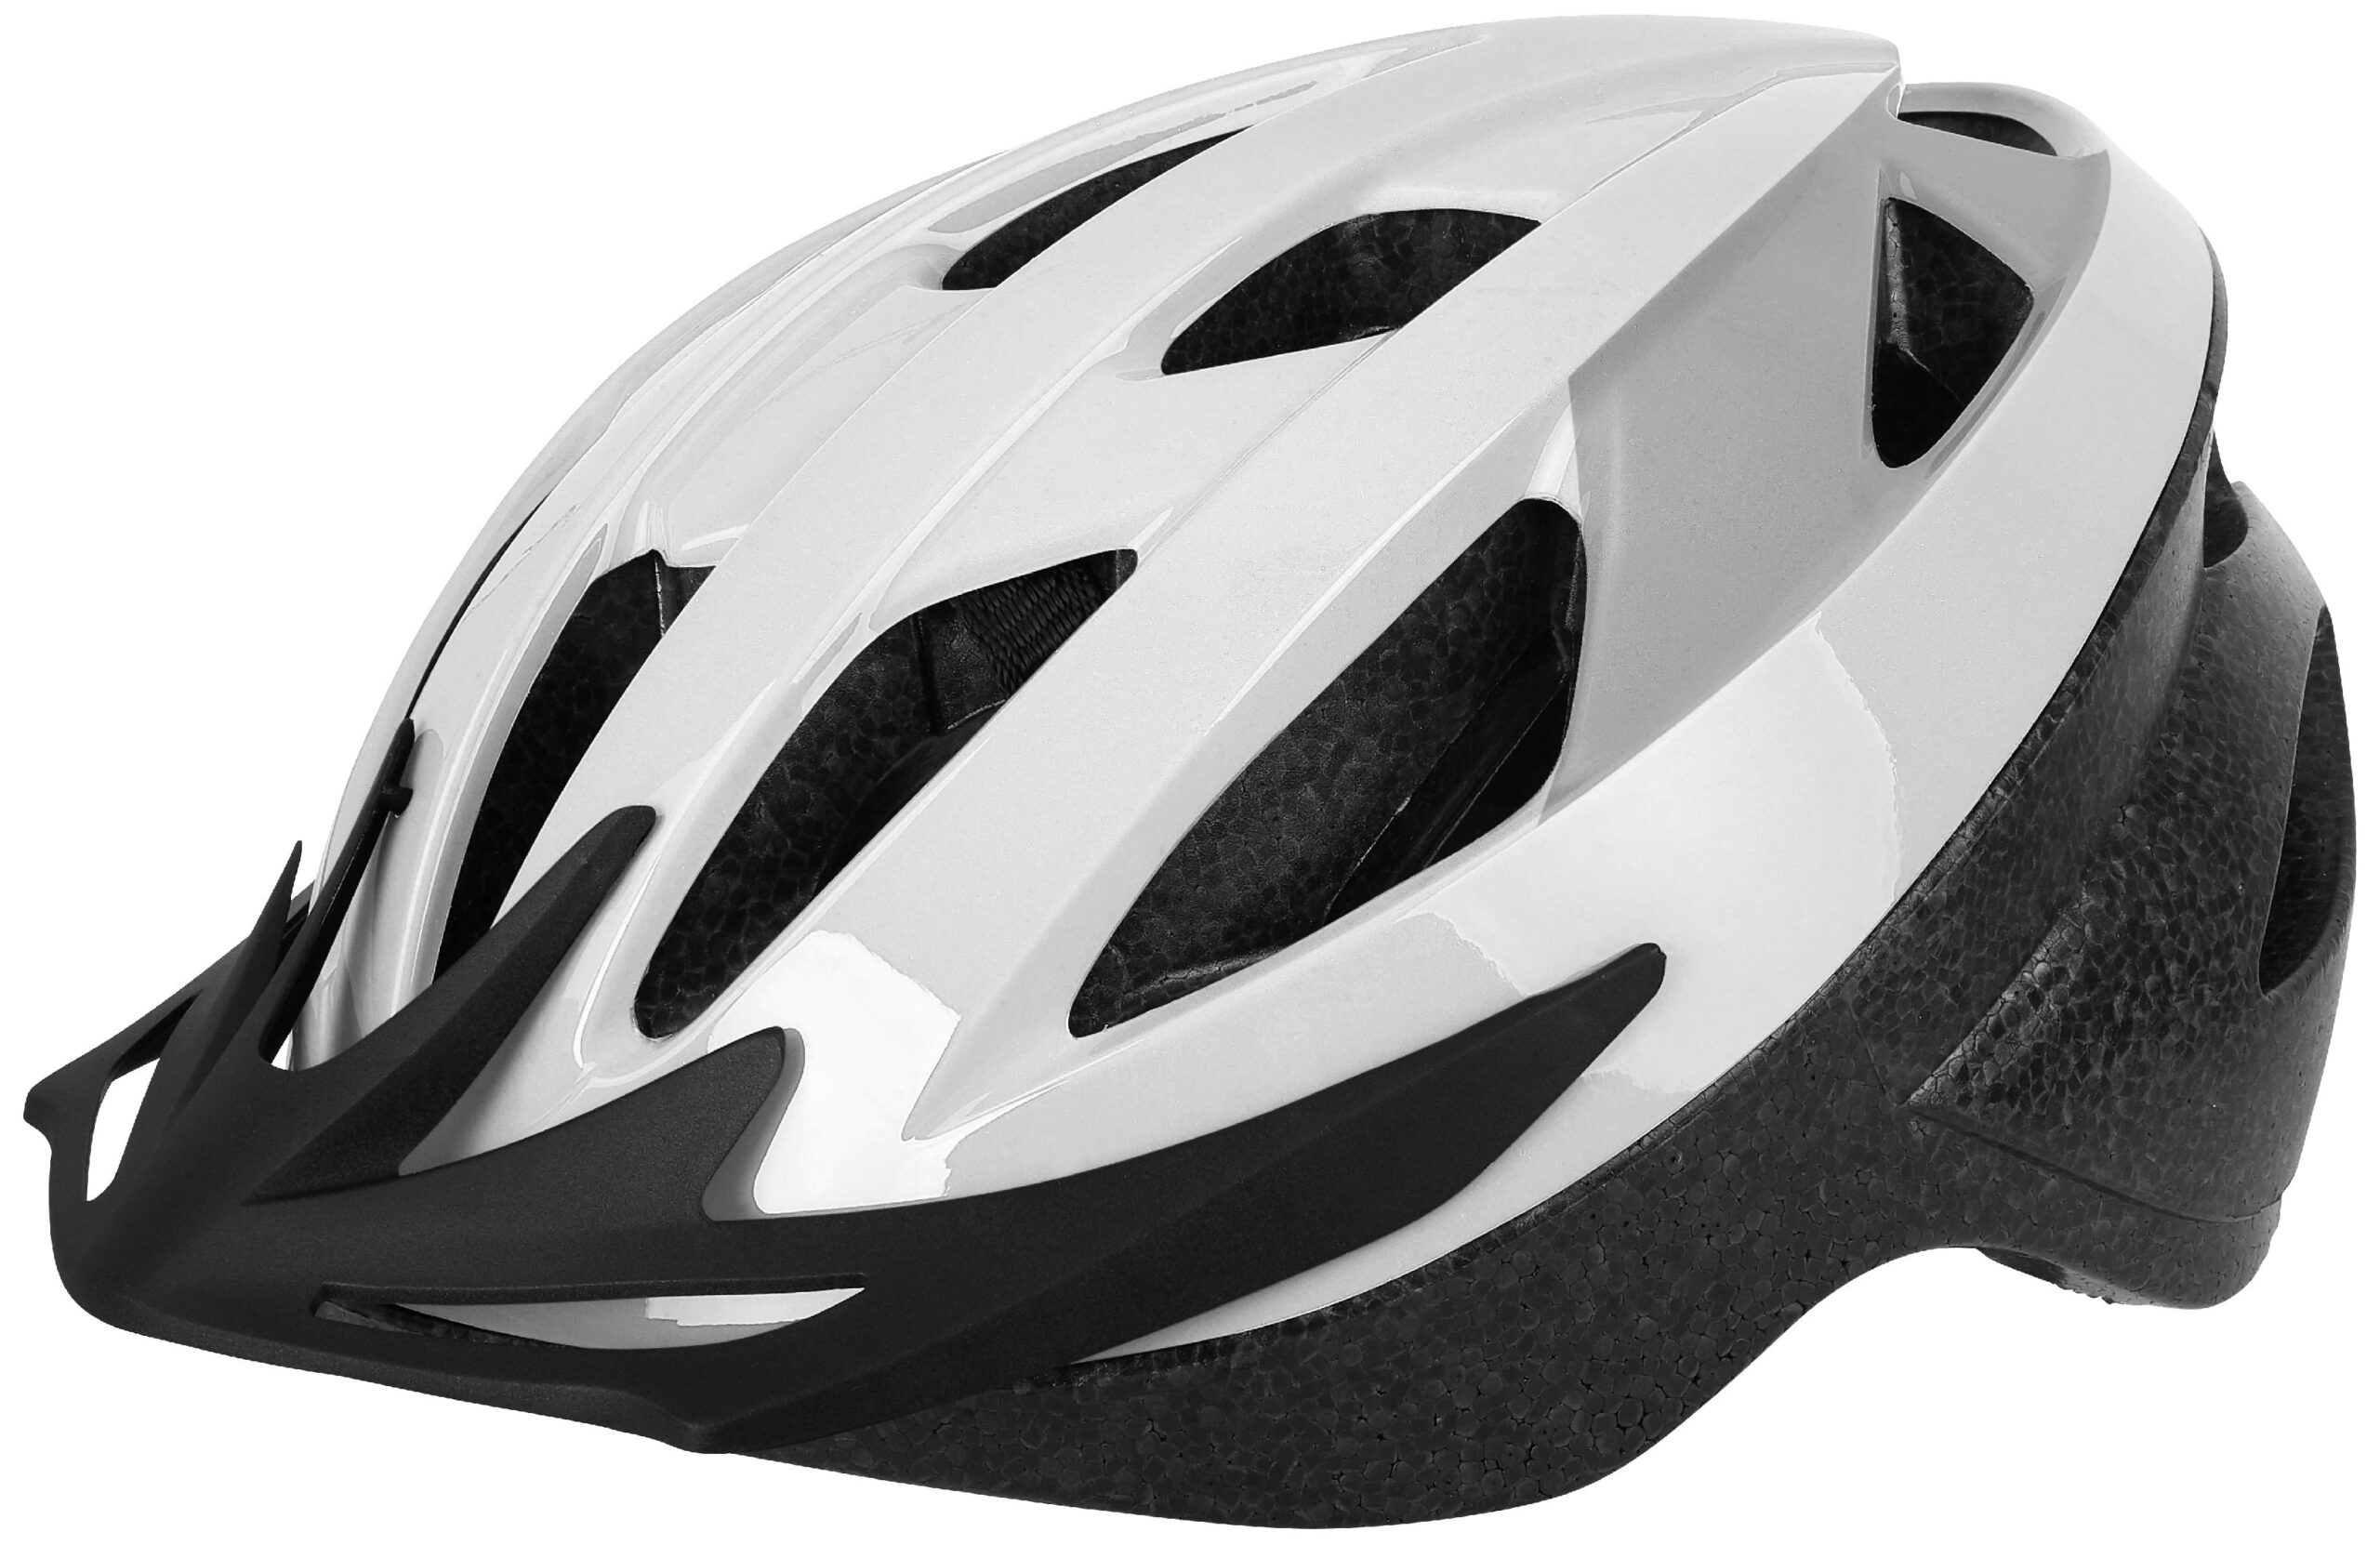 HB01WGM Oxford White/Grey Medium 54-58cm Oxford Neat Helmet